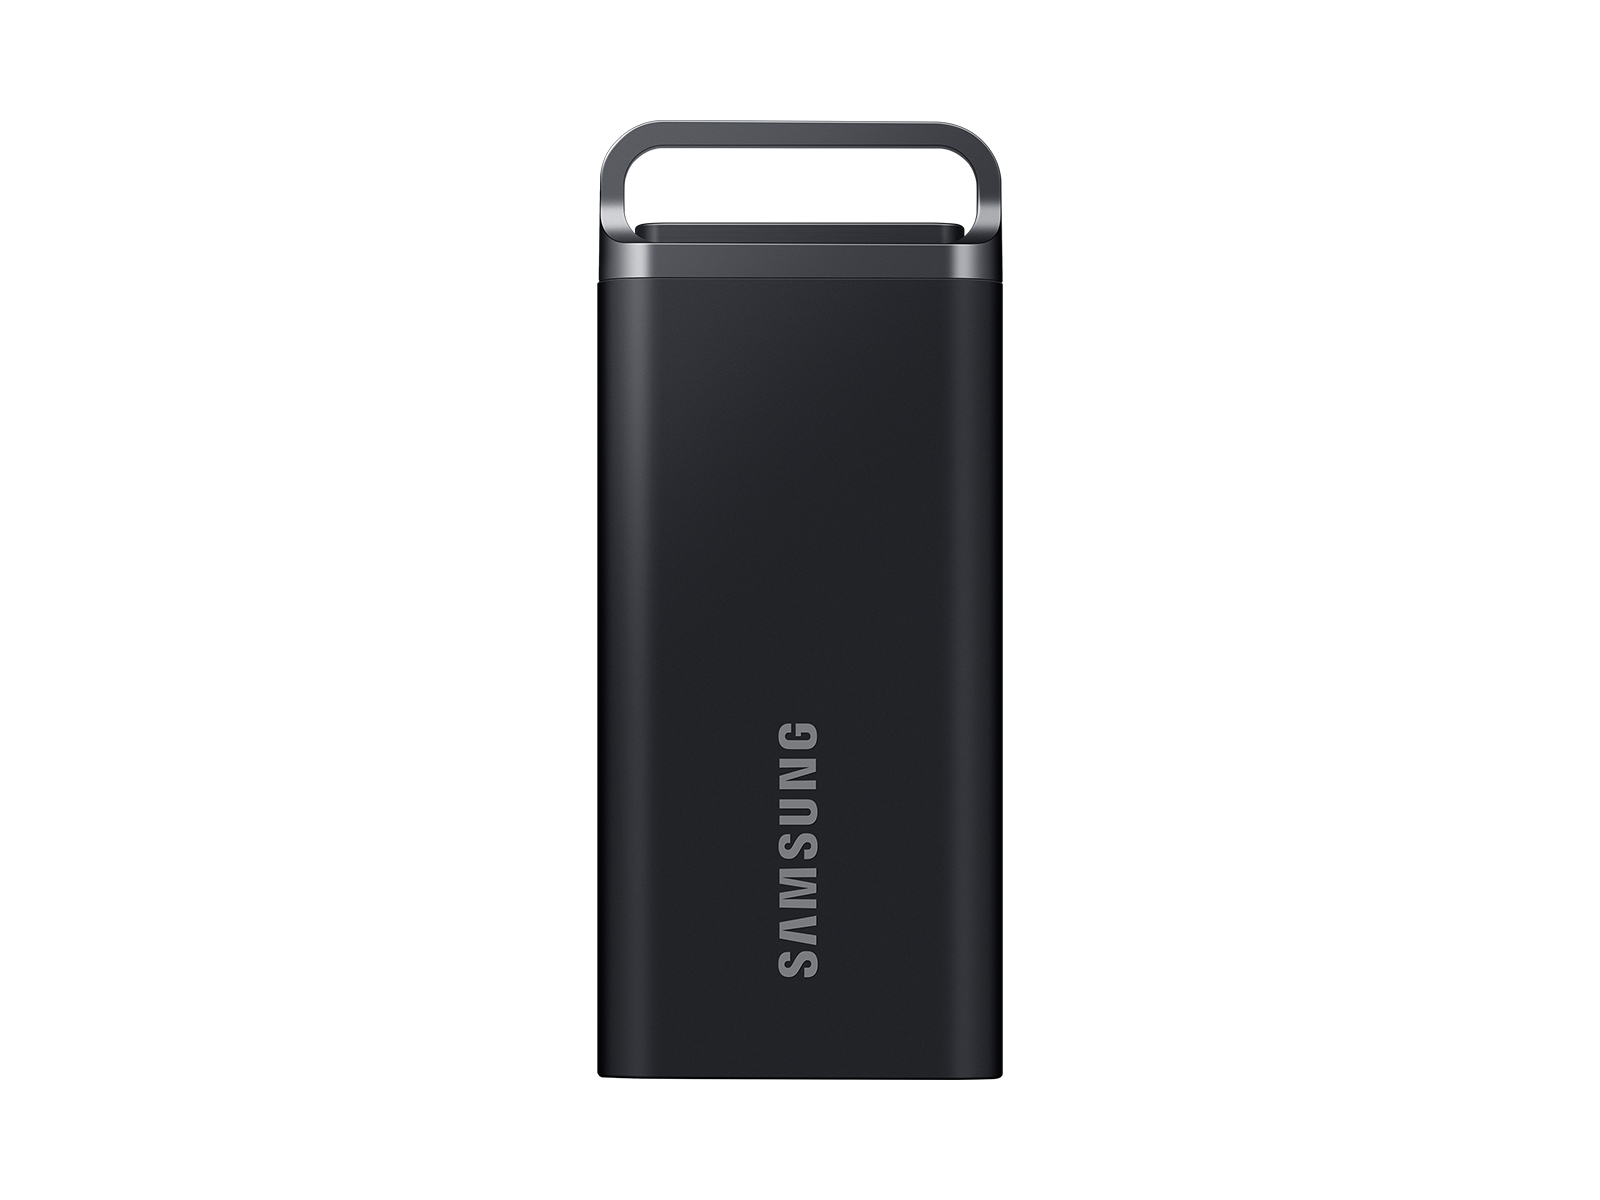 Samsung 860 EVO MZ-76E500B - SSD - chiffré - 500 Go - interne - 2.5 - SATA  6Gb/s - mémoire tampon : 512 Mo - AES 256 bits - TCG Opal Encryption 2.0 -  SSD internes - Achat & prix